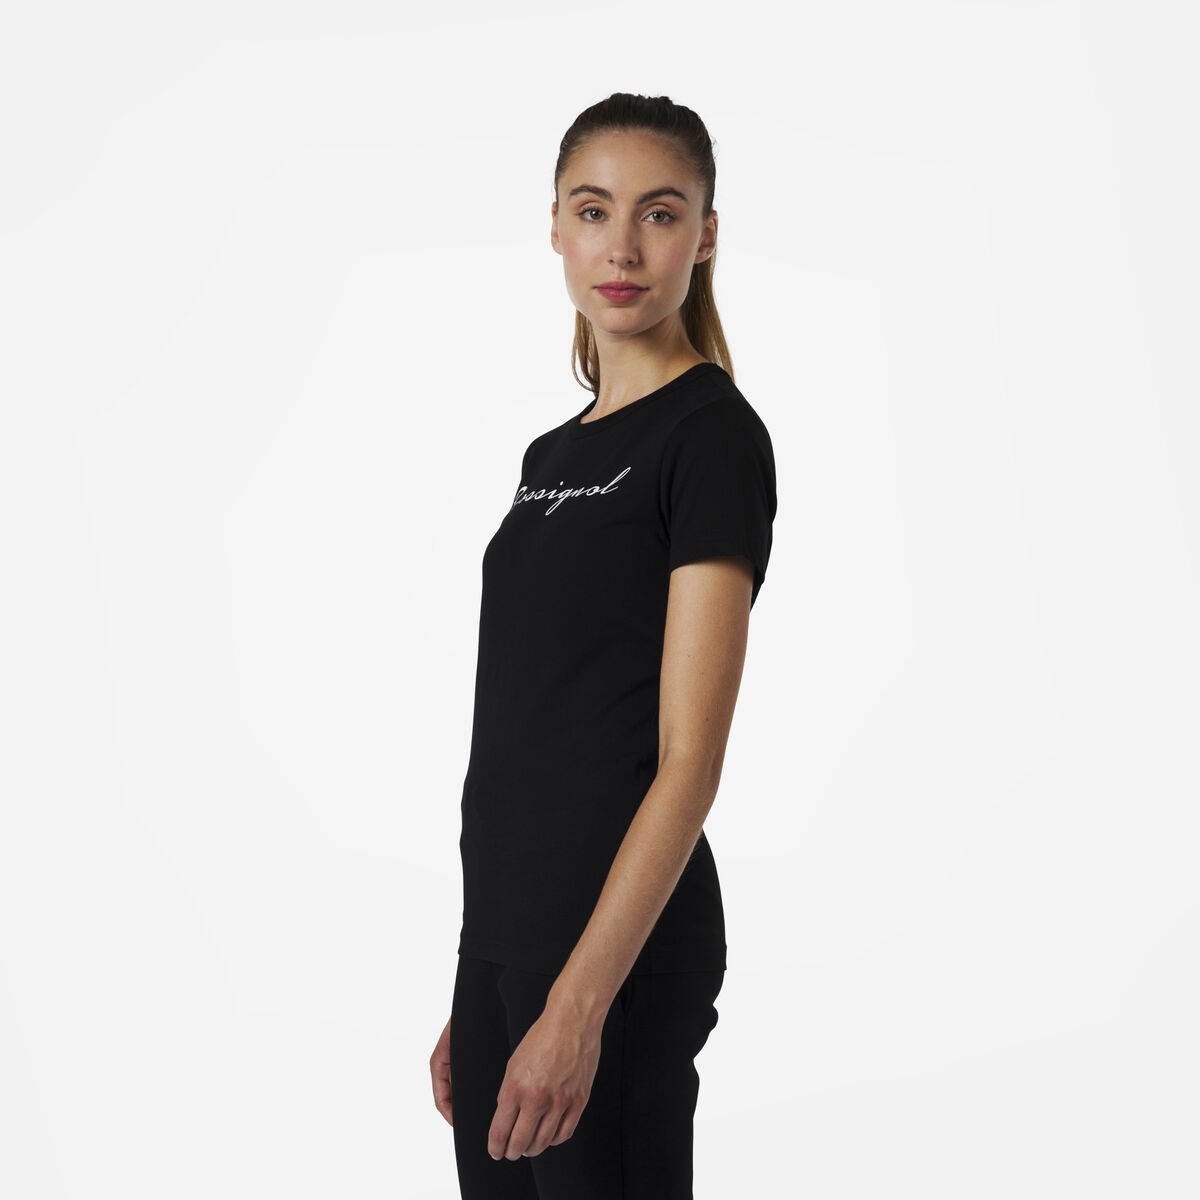 Rossignol T-shirt Logo Femme Black